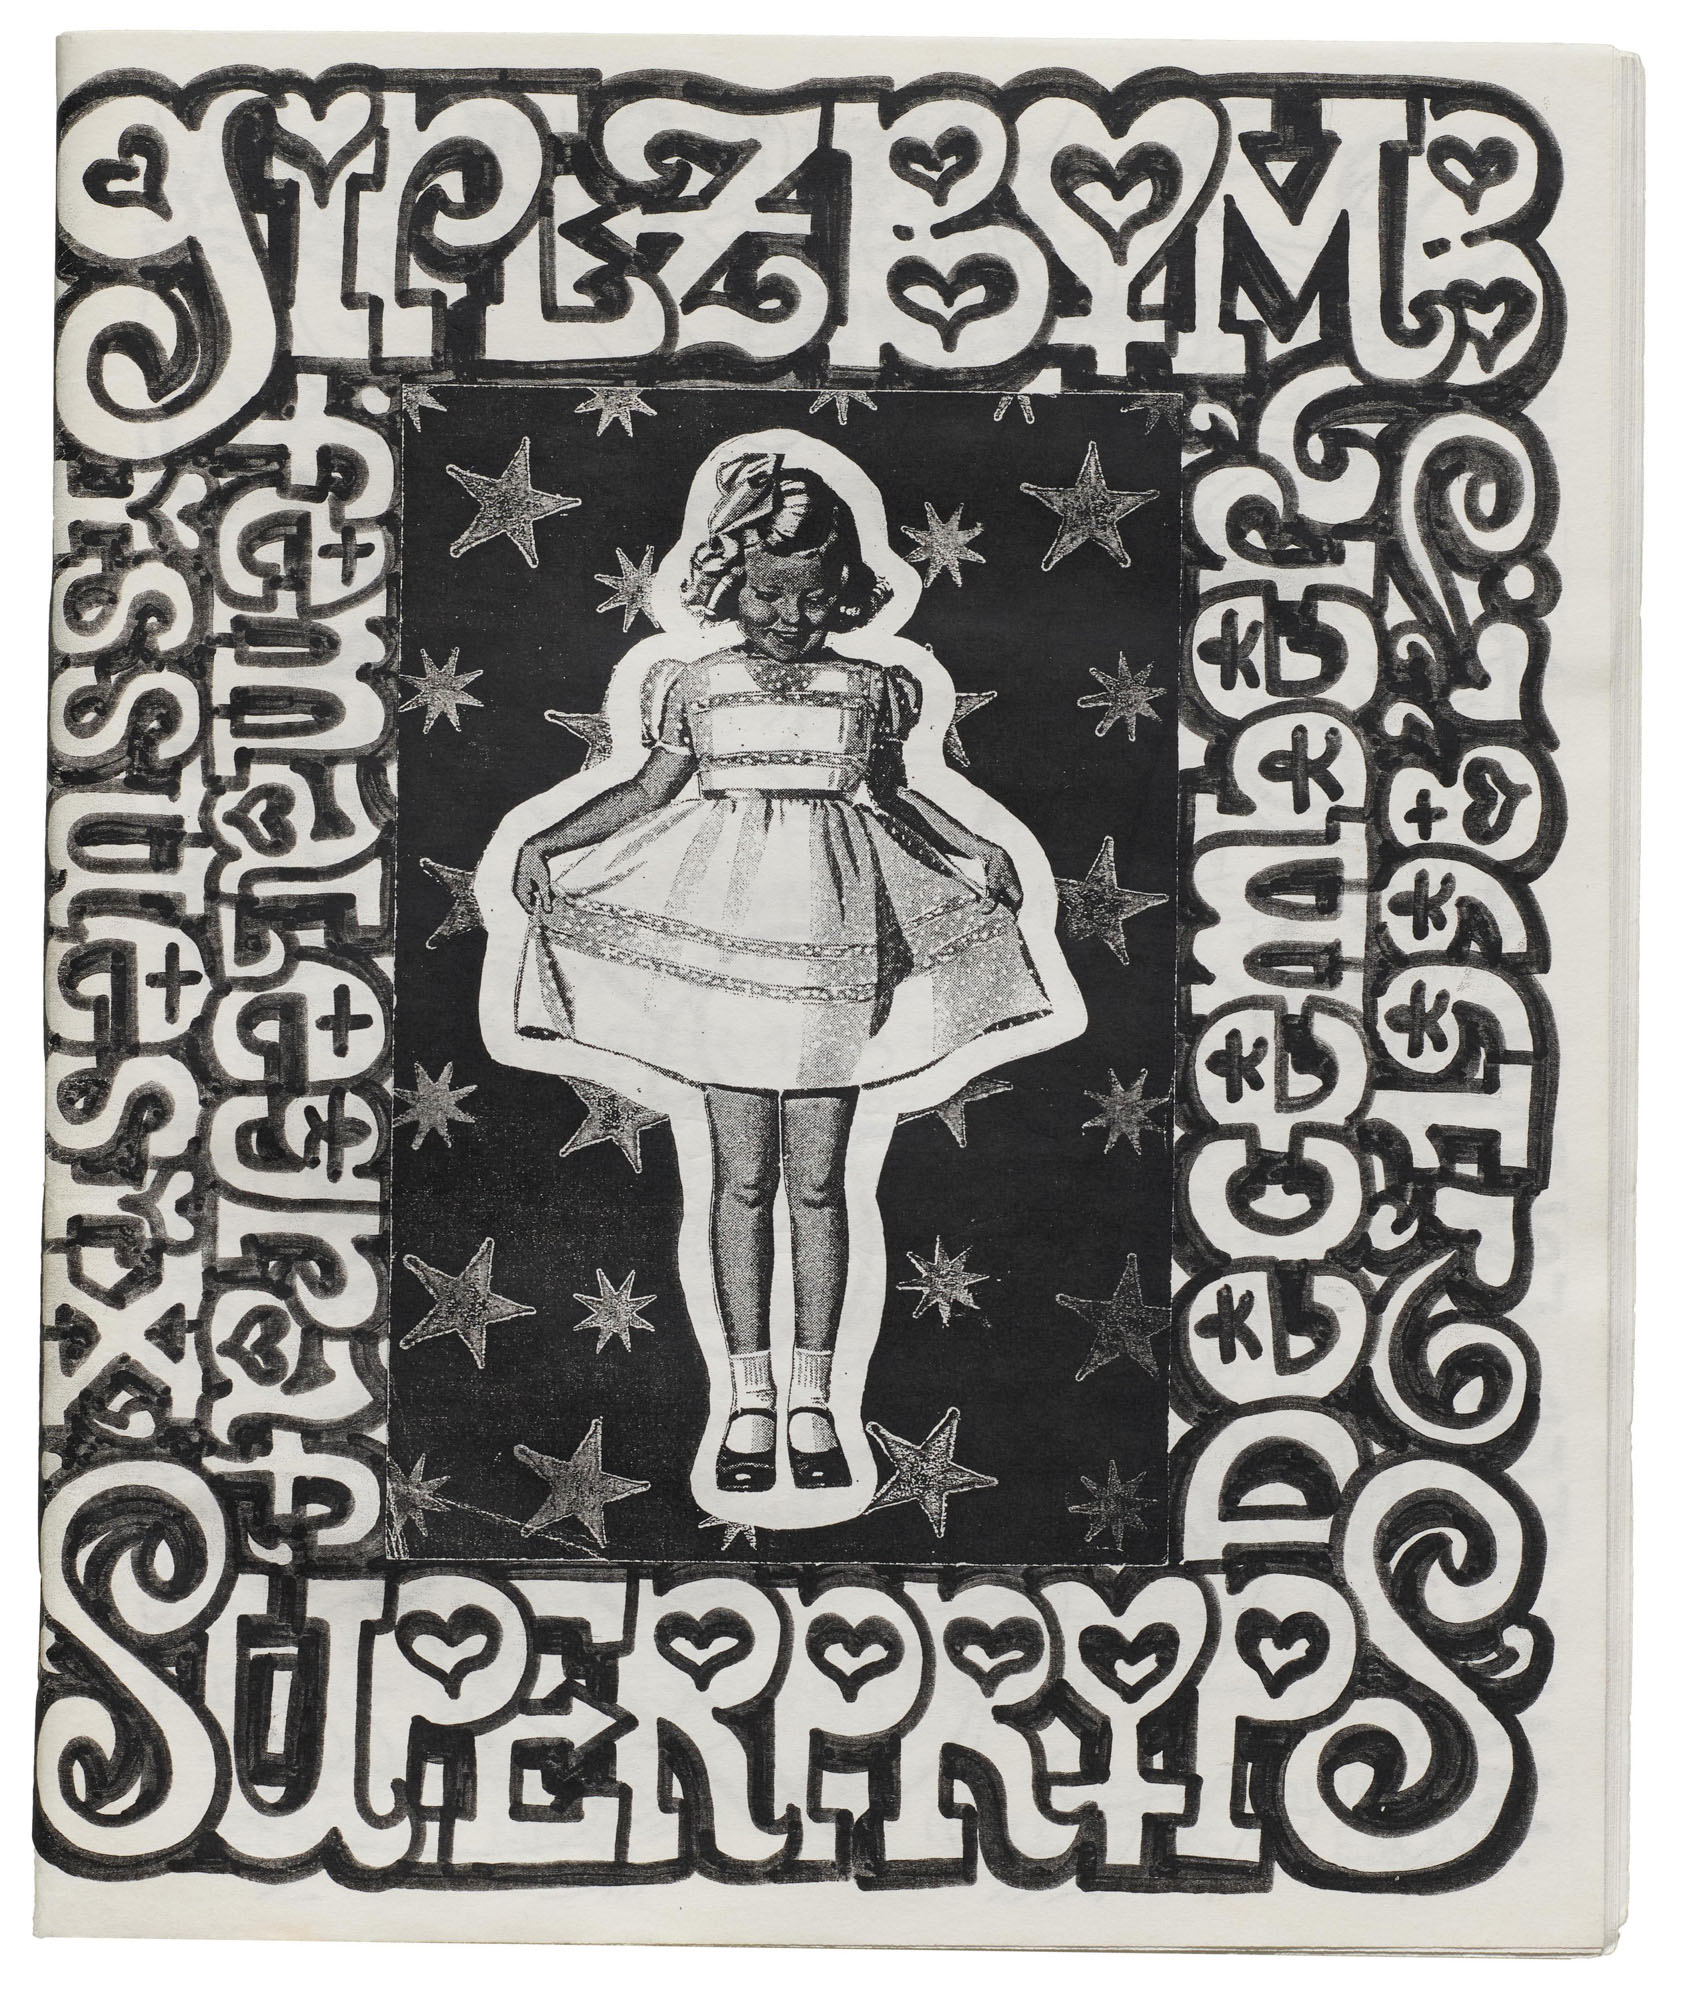 Jocelyn Superstar, Super Propaganda, issue 6, Girlz Bomb, 1998, photocopy, San Francisco